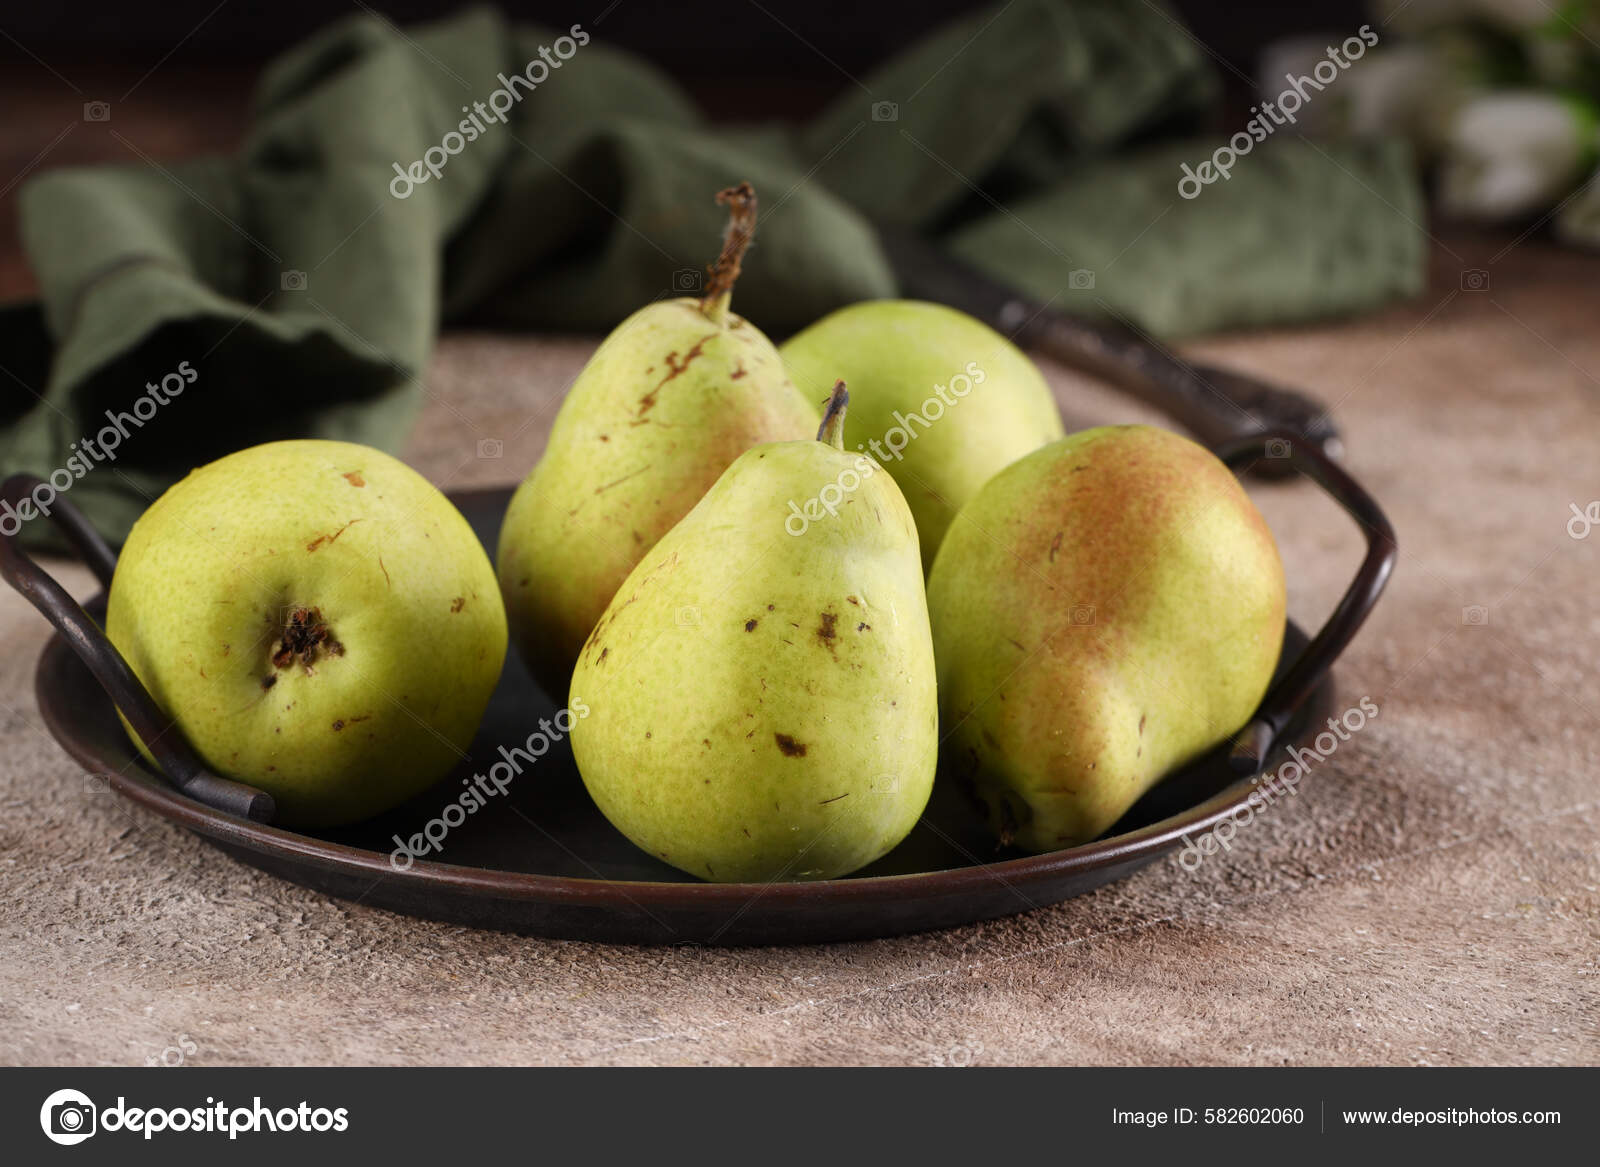 https://st.depositphotos.com/1026029/58260/i/1600/depositphotos_582602060-stock-photo-organic-fresh-pears-table.jpg